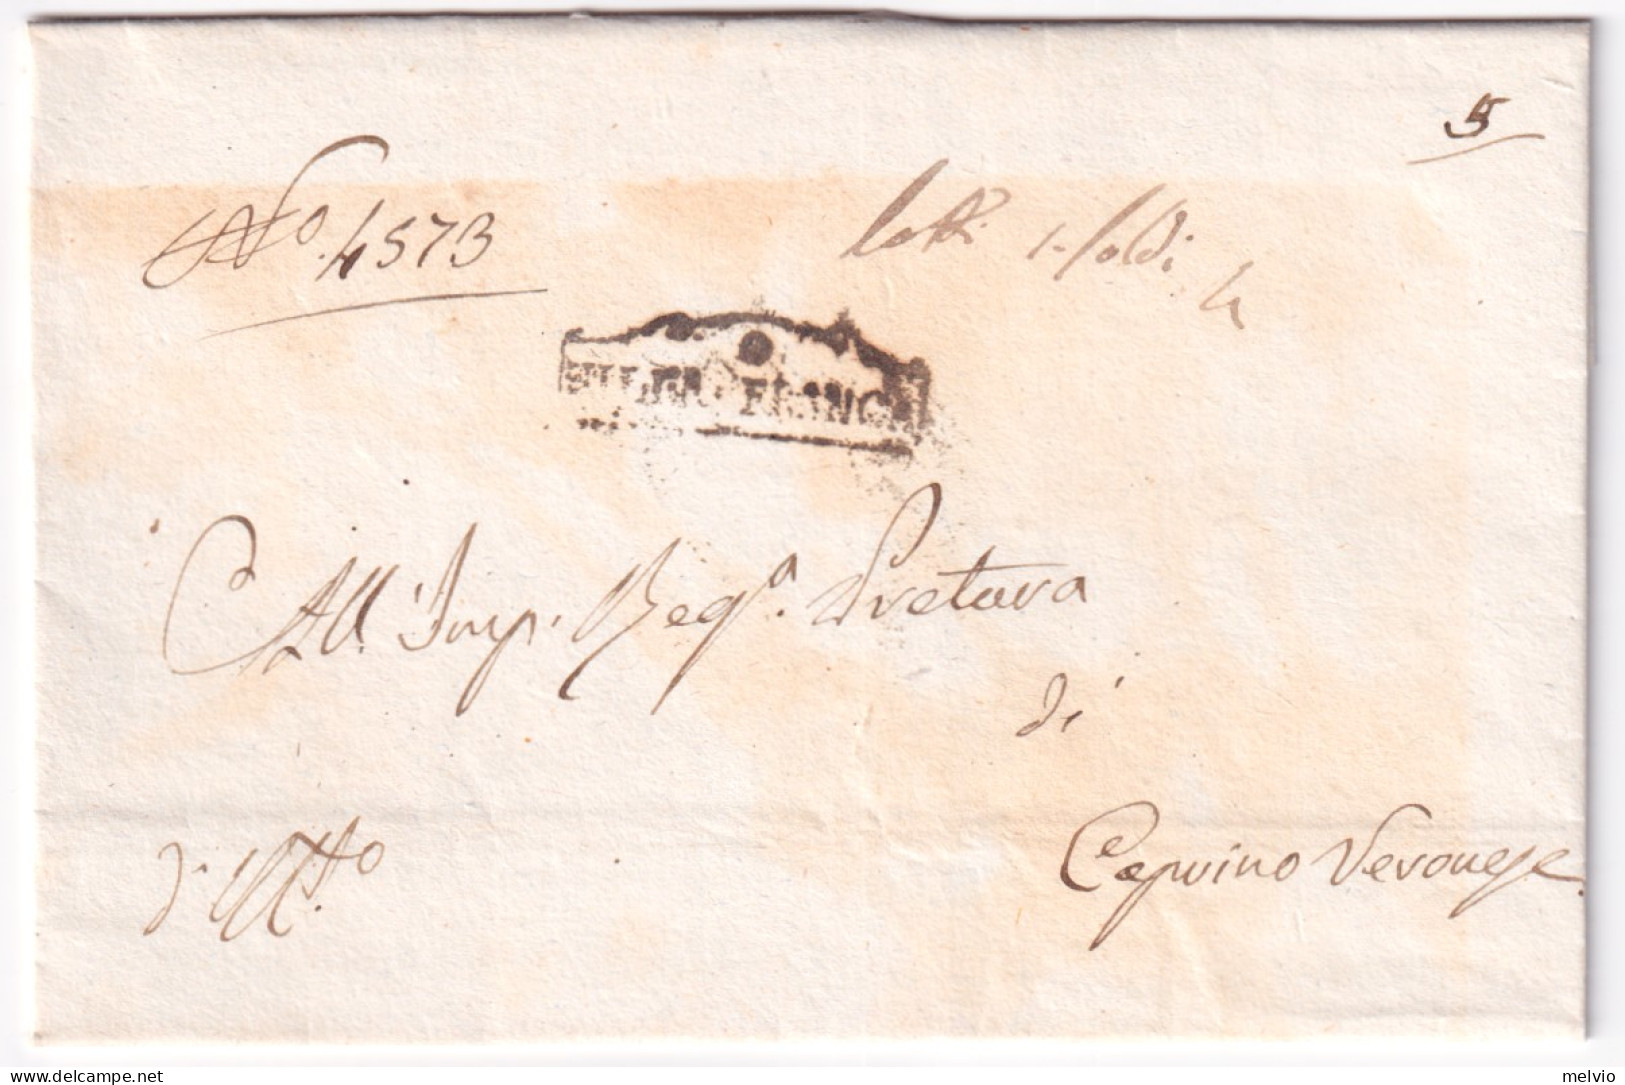 1831-VILLA FRANCA Cartella (28.9) Su Lettera Soprascritta - ...-1850 Préphilatélie